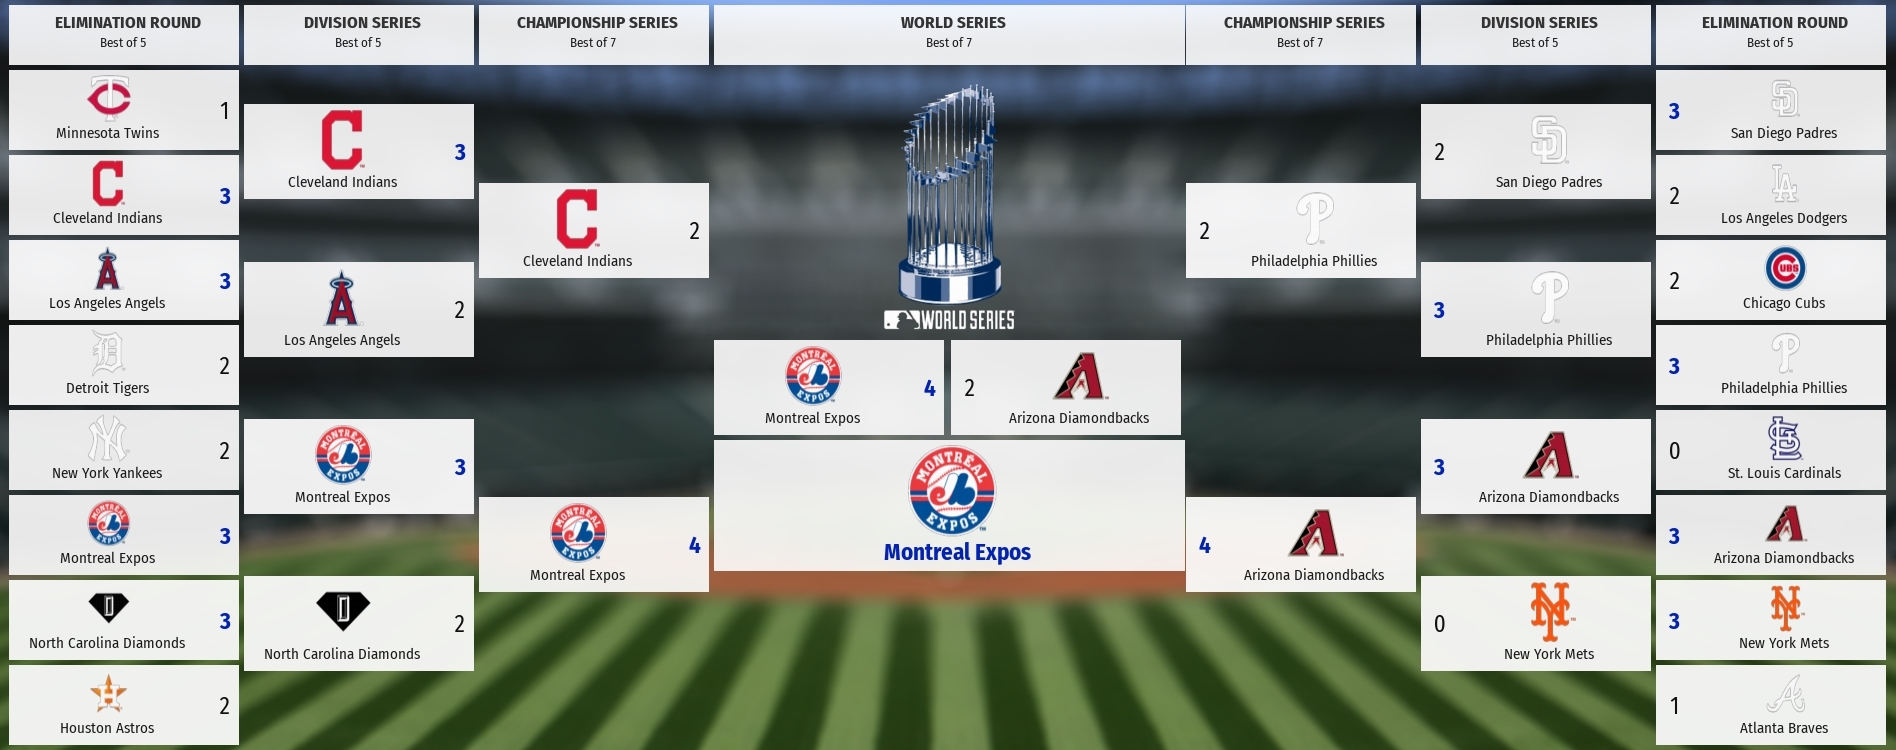 Finally won the World Series! 2022 Montreal Expos